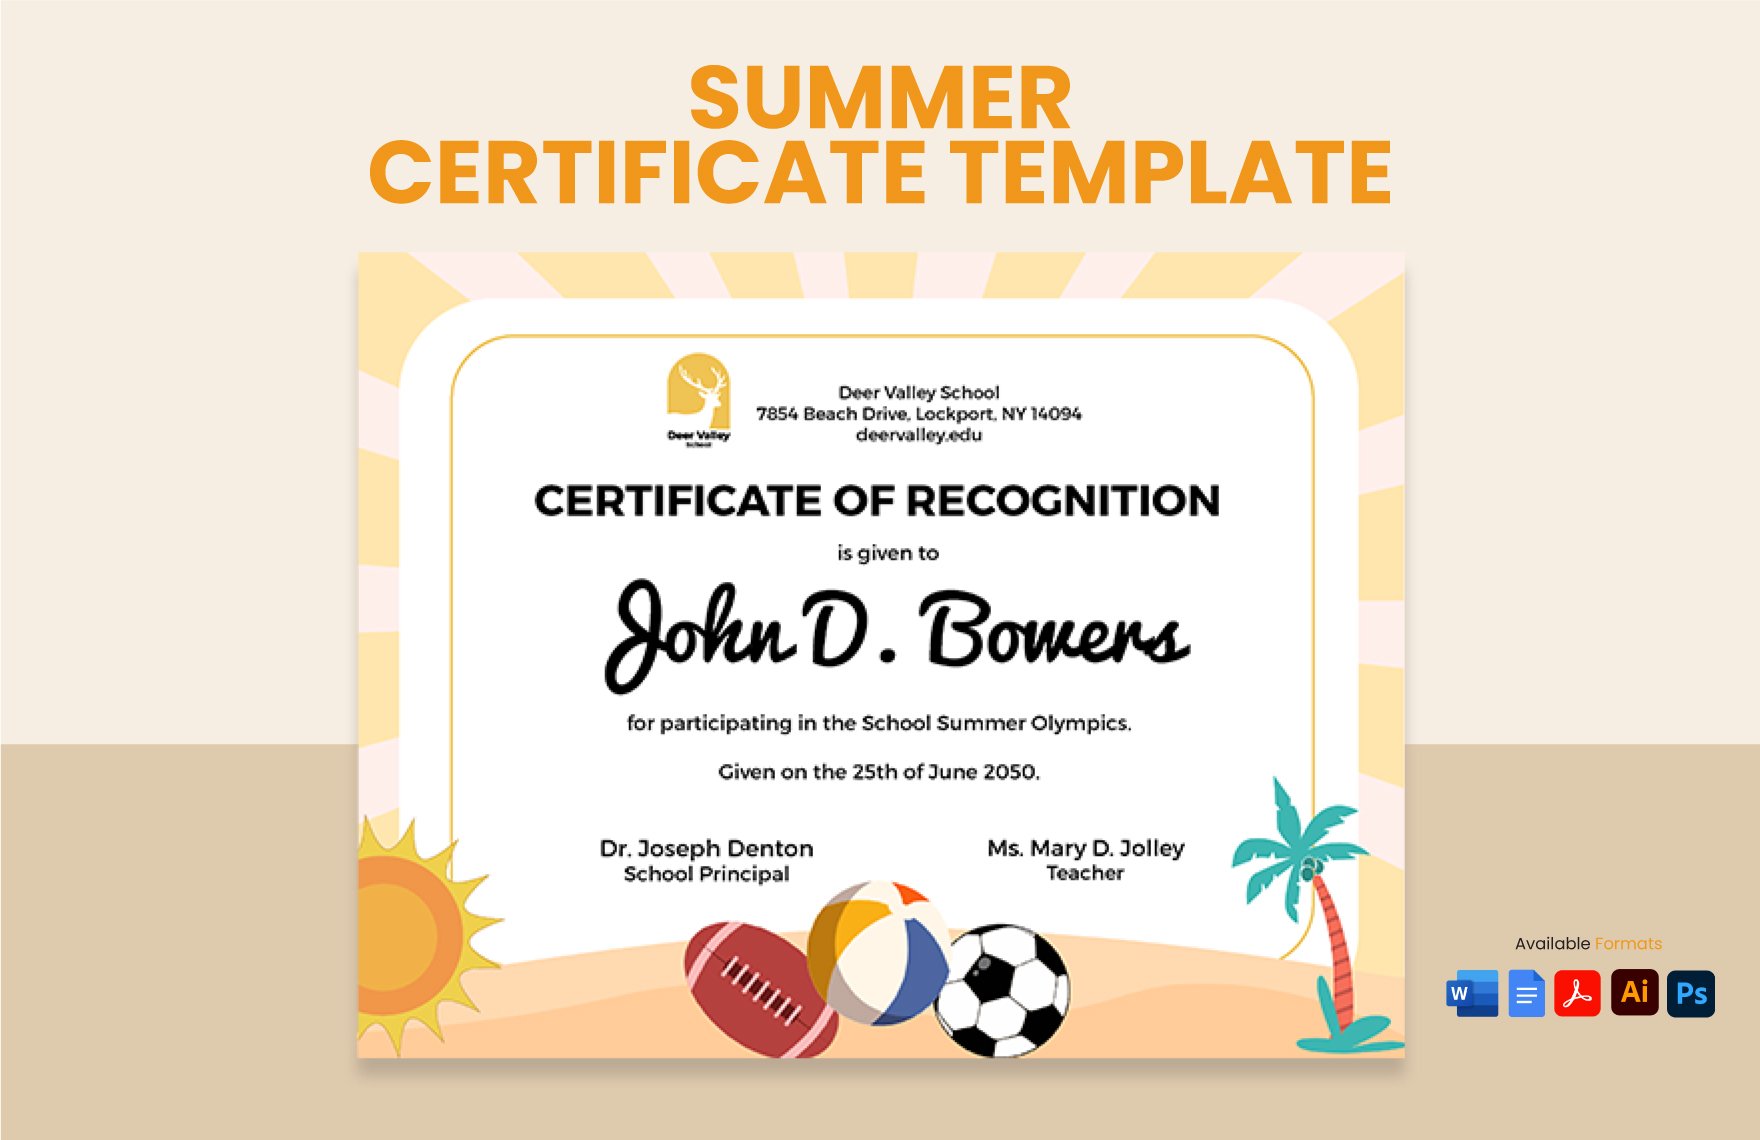 Free Summer Certificate in Word, Google Docs, PDF, Illustrator, PSD